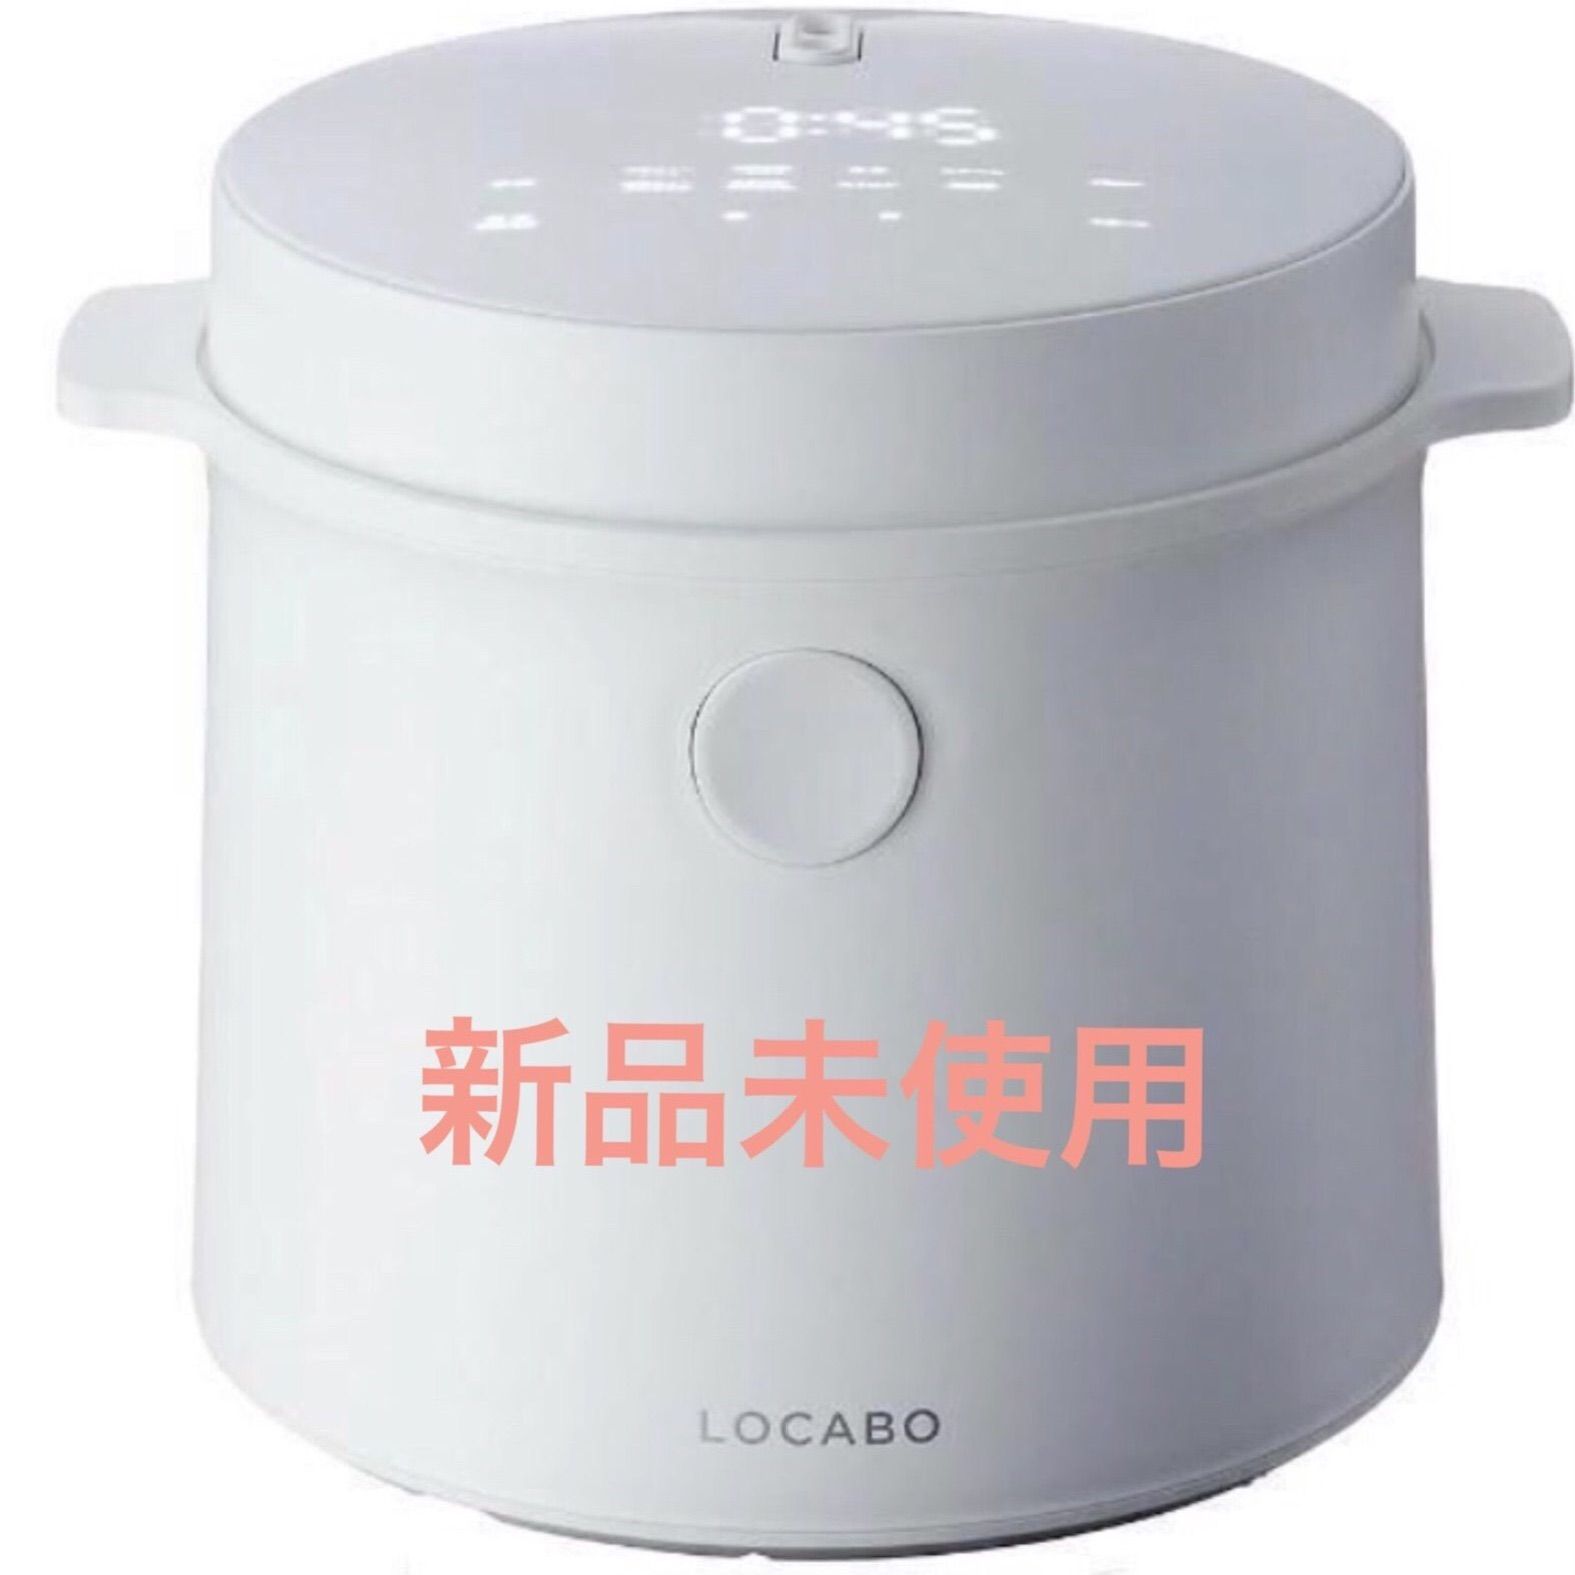 LOCABO 糖質カット炊飯器 JM-C20E-B - 炊飯器